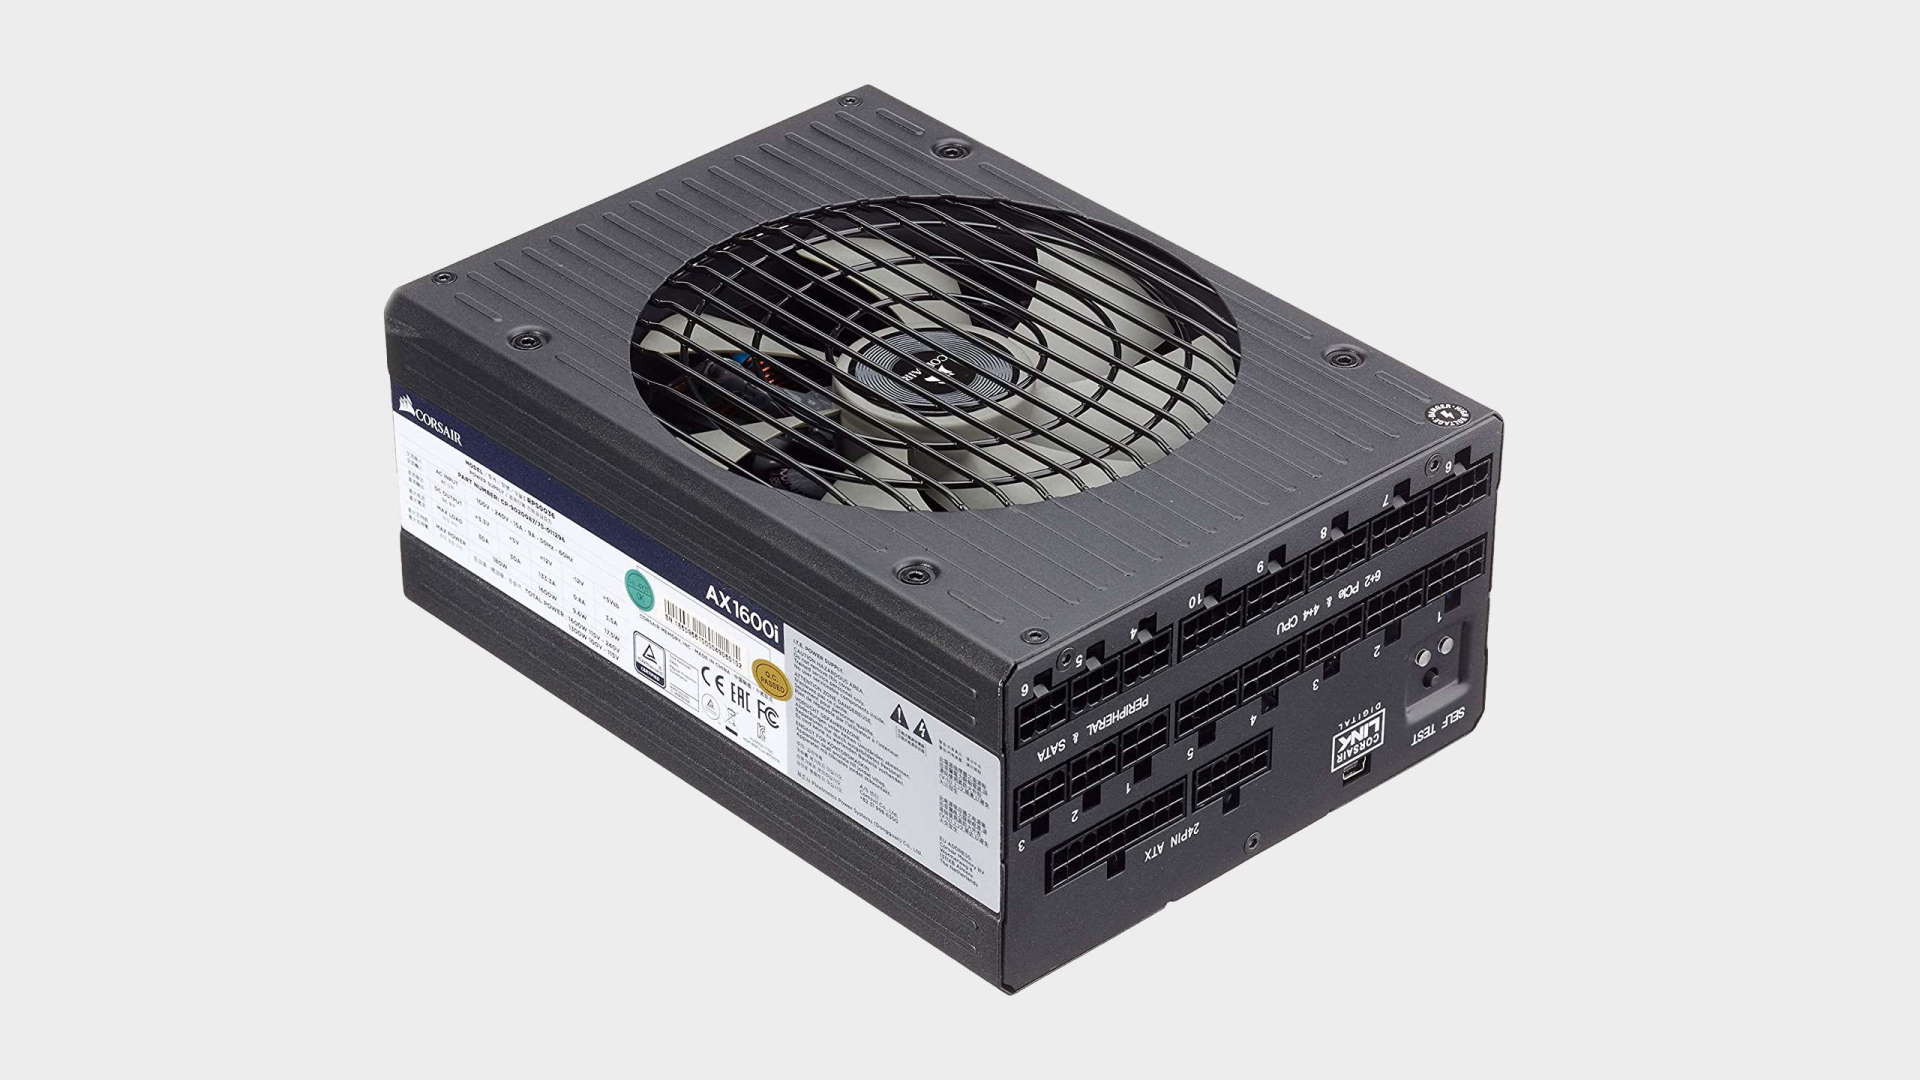 Corsair AX1600i power supply